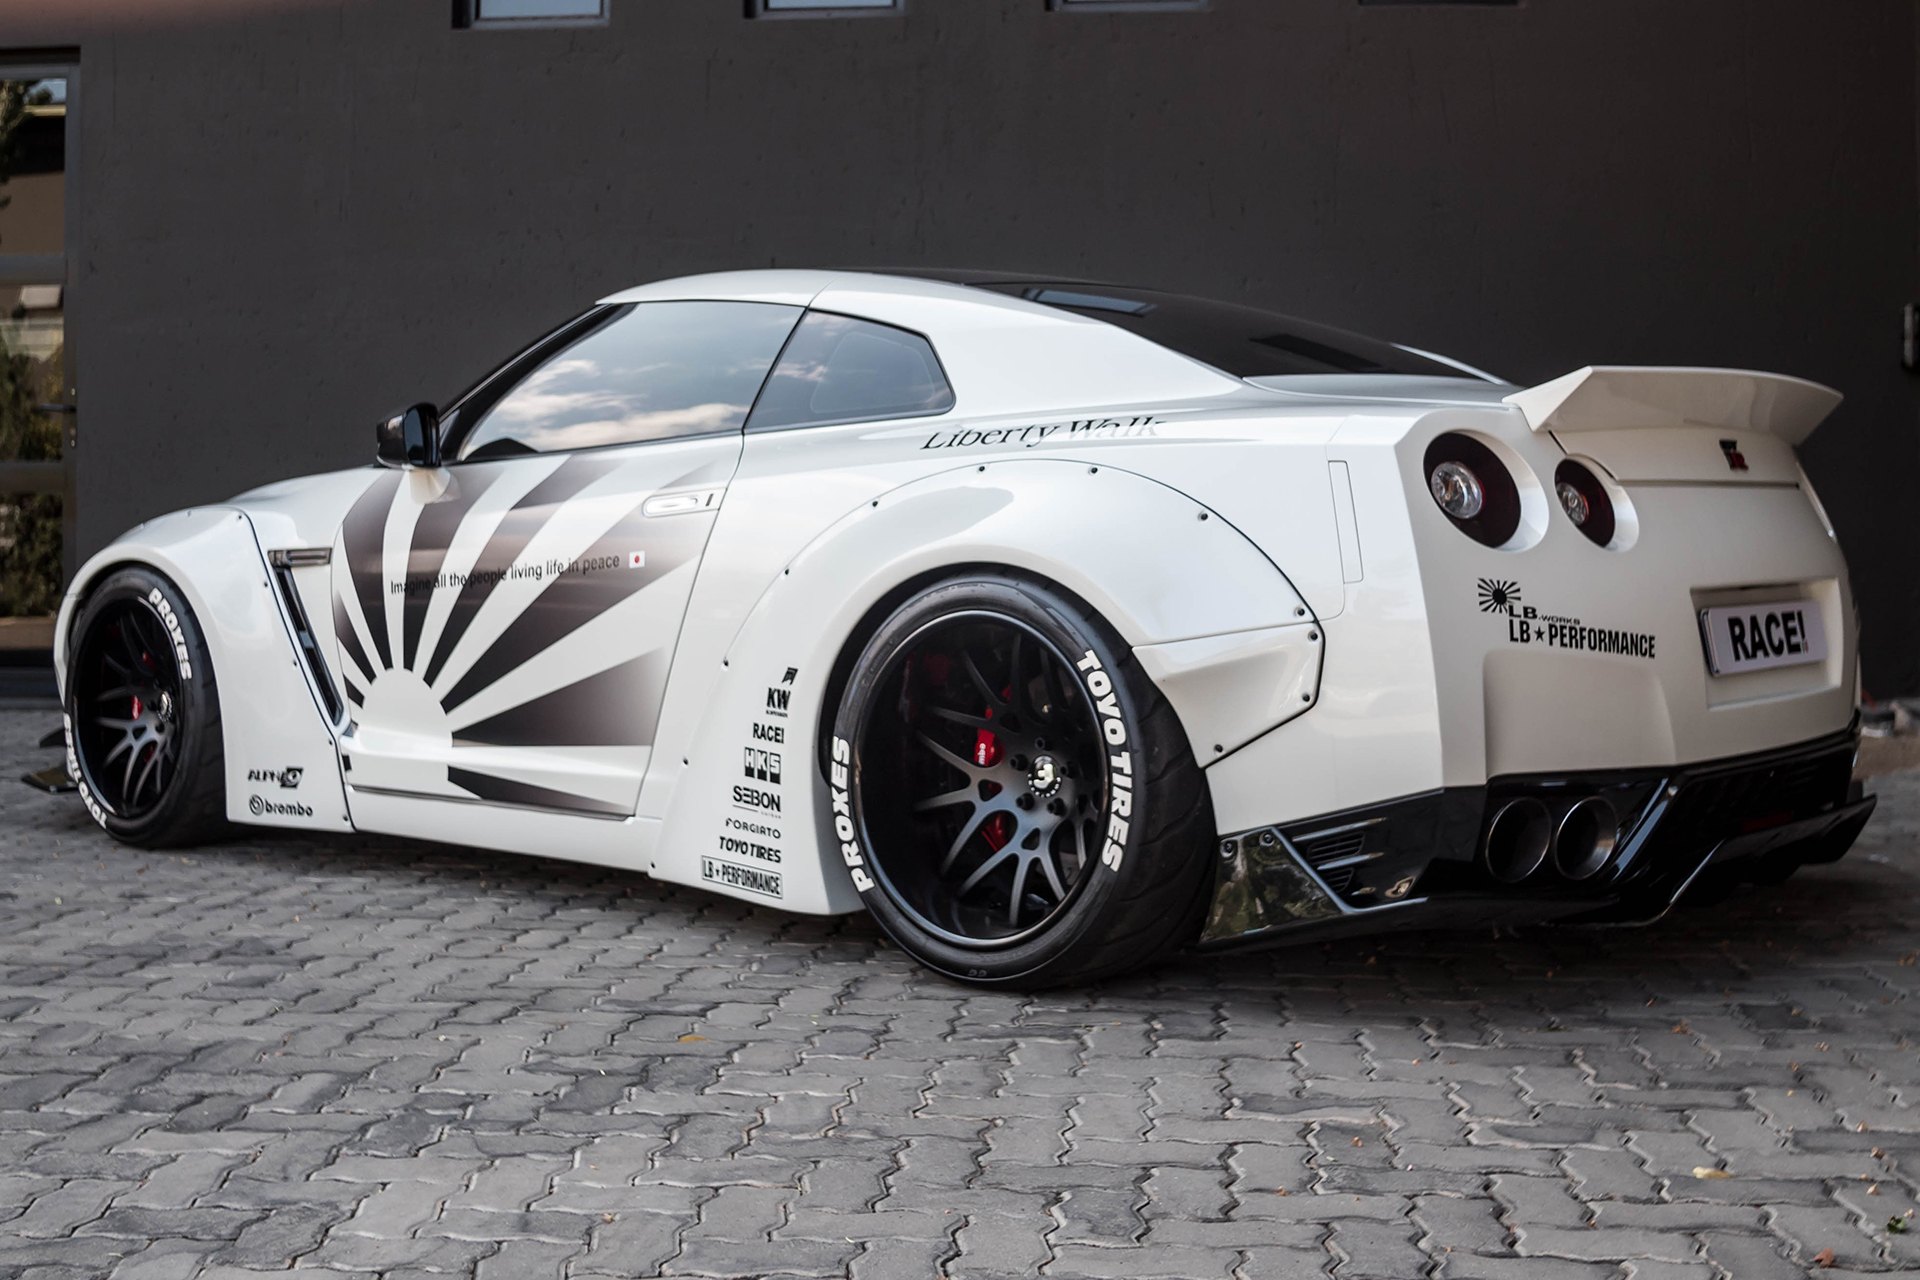 White Debadged Nissan GT-R on Toyo Proxes Tires - Photo by Forgiato